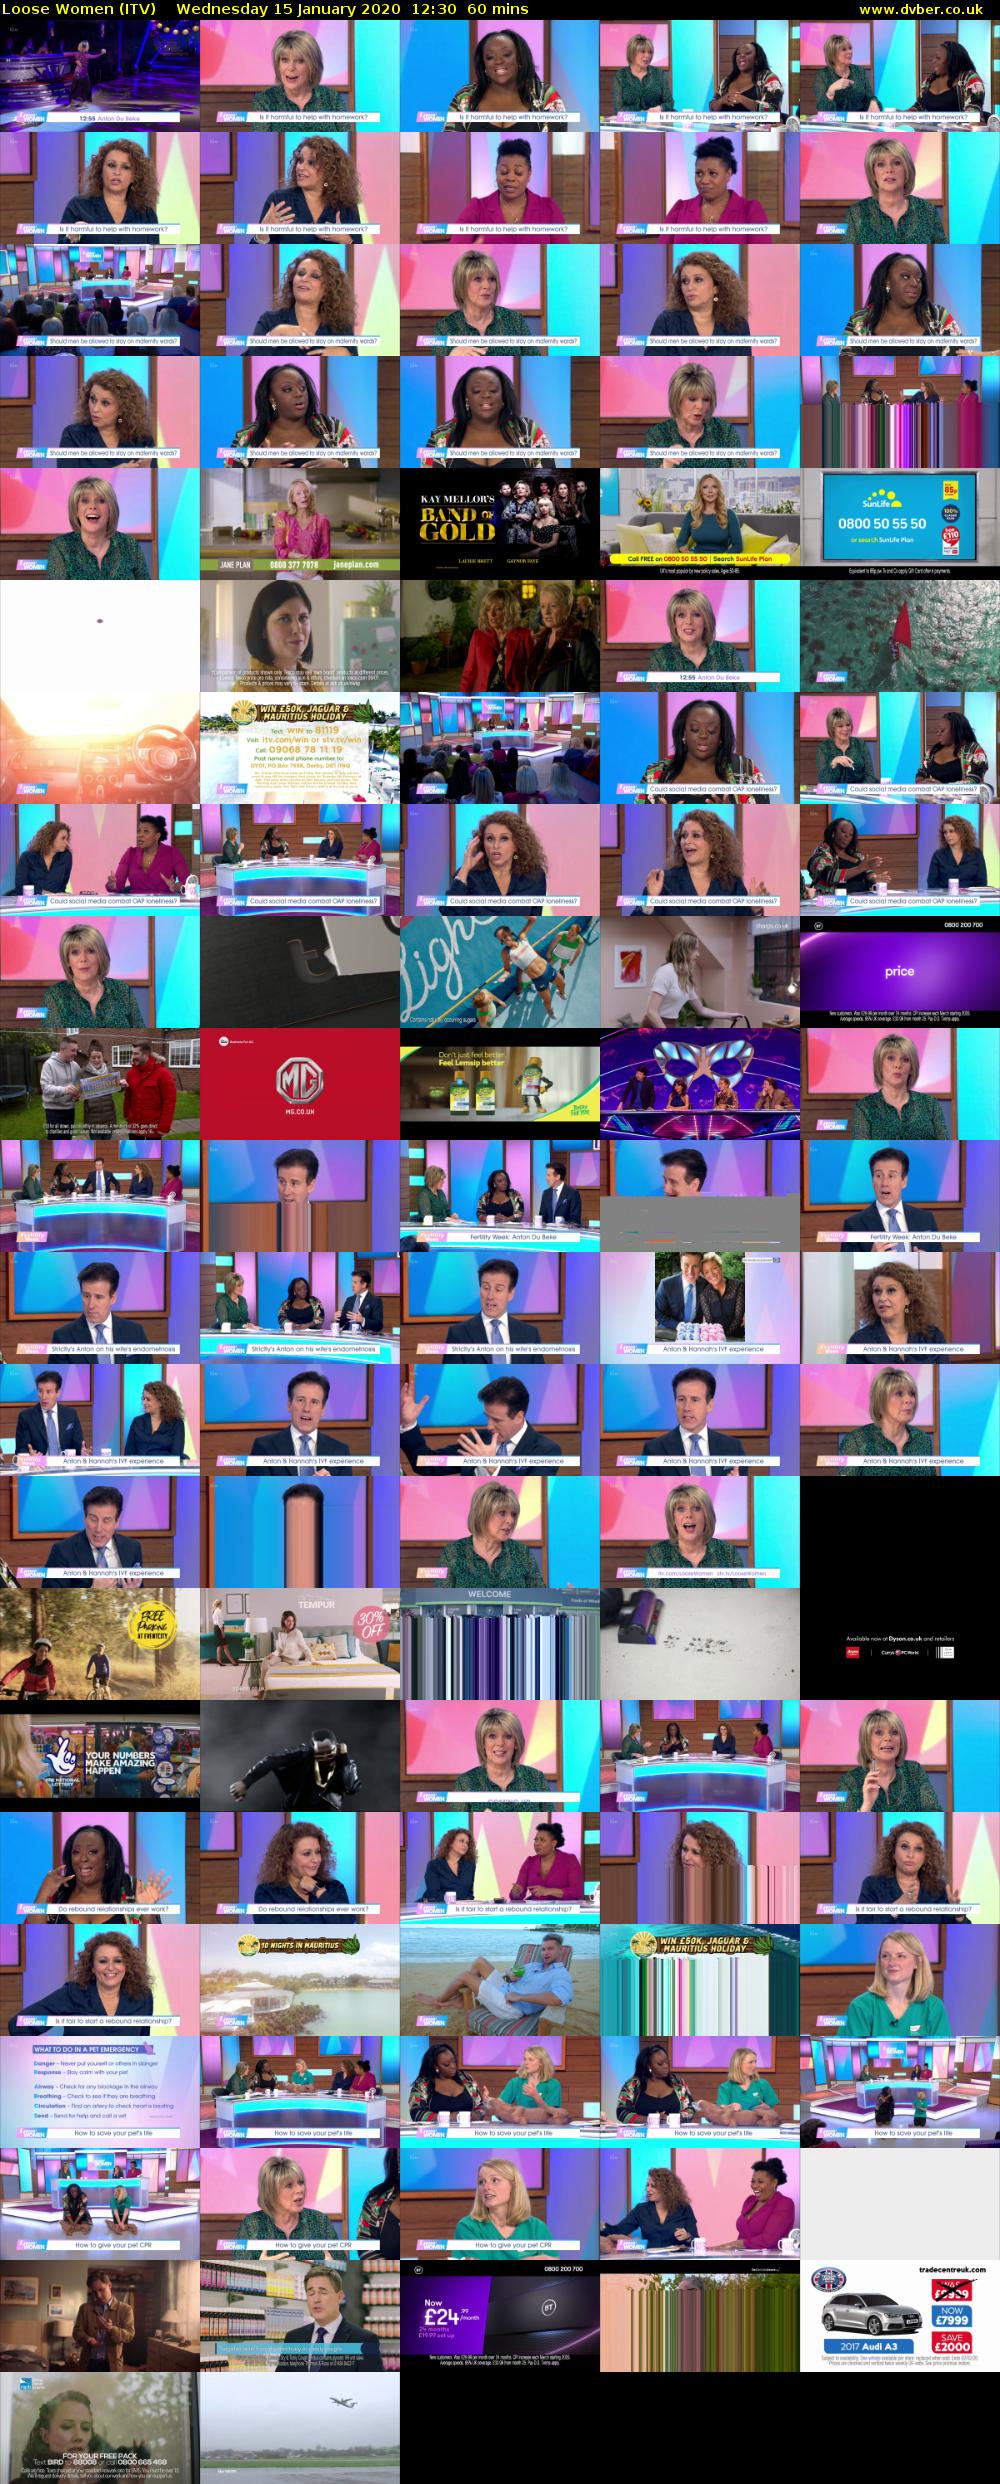 Loose Women (ITV) Wednesday 15 January 2020 12:30 - 13:30